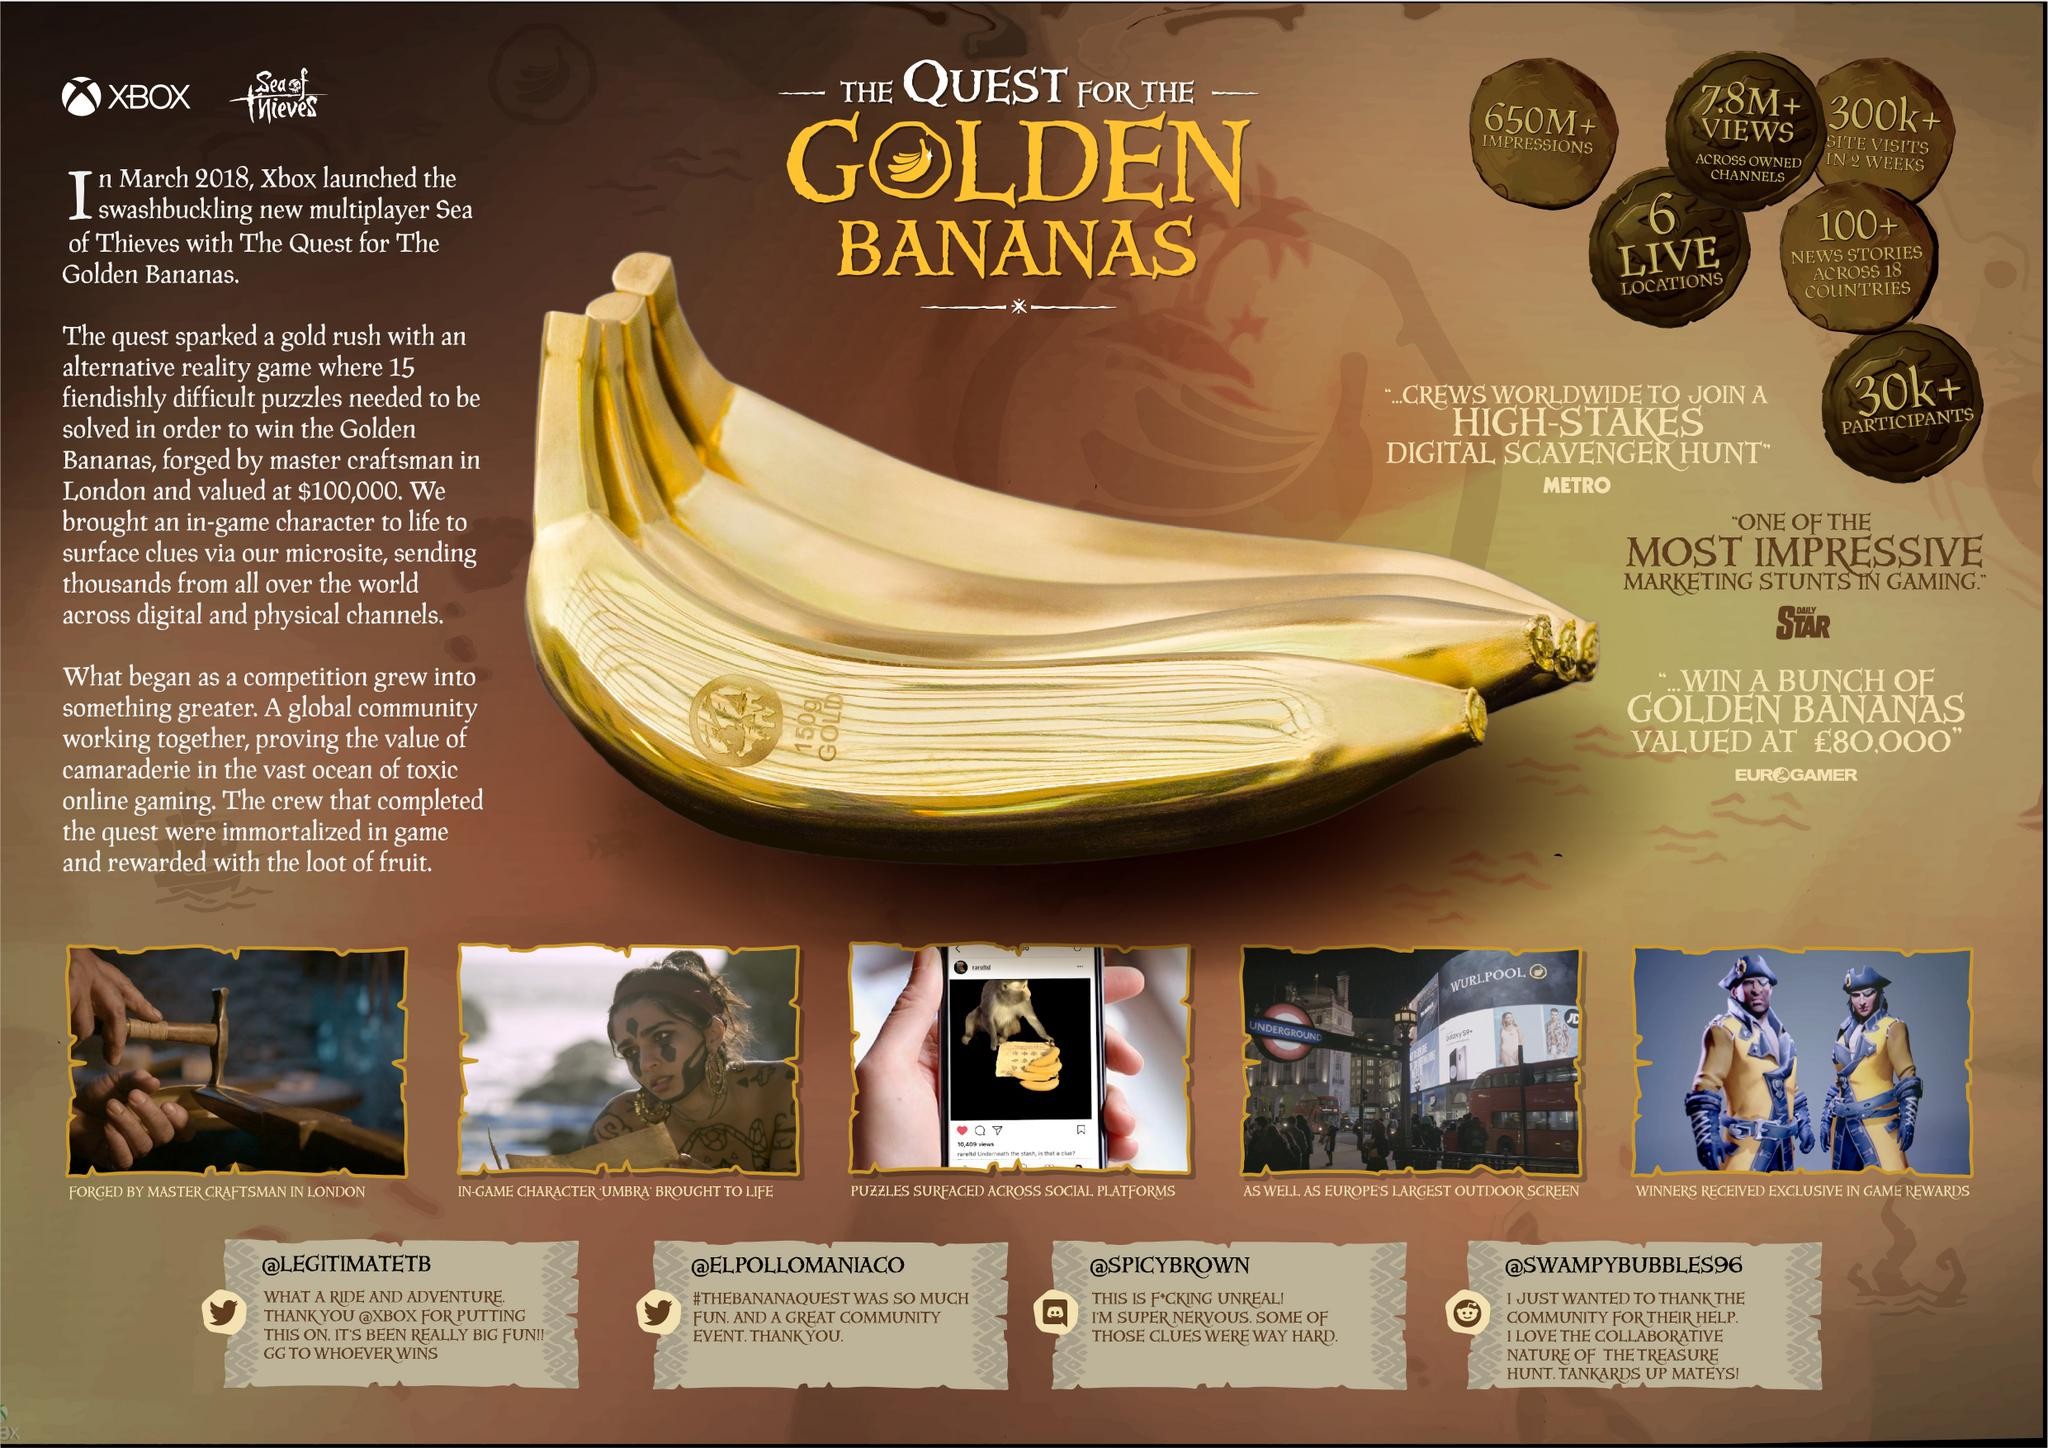 Golden Bananas